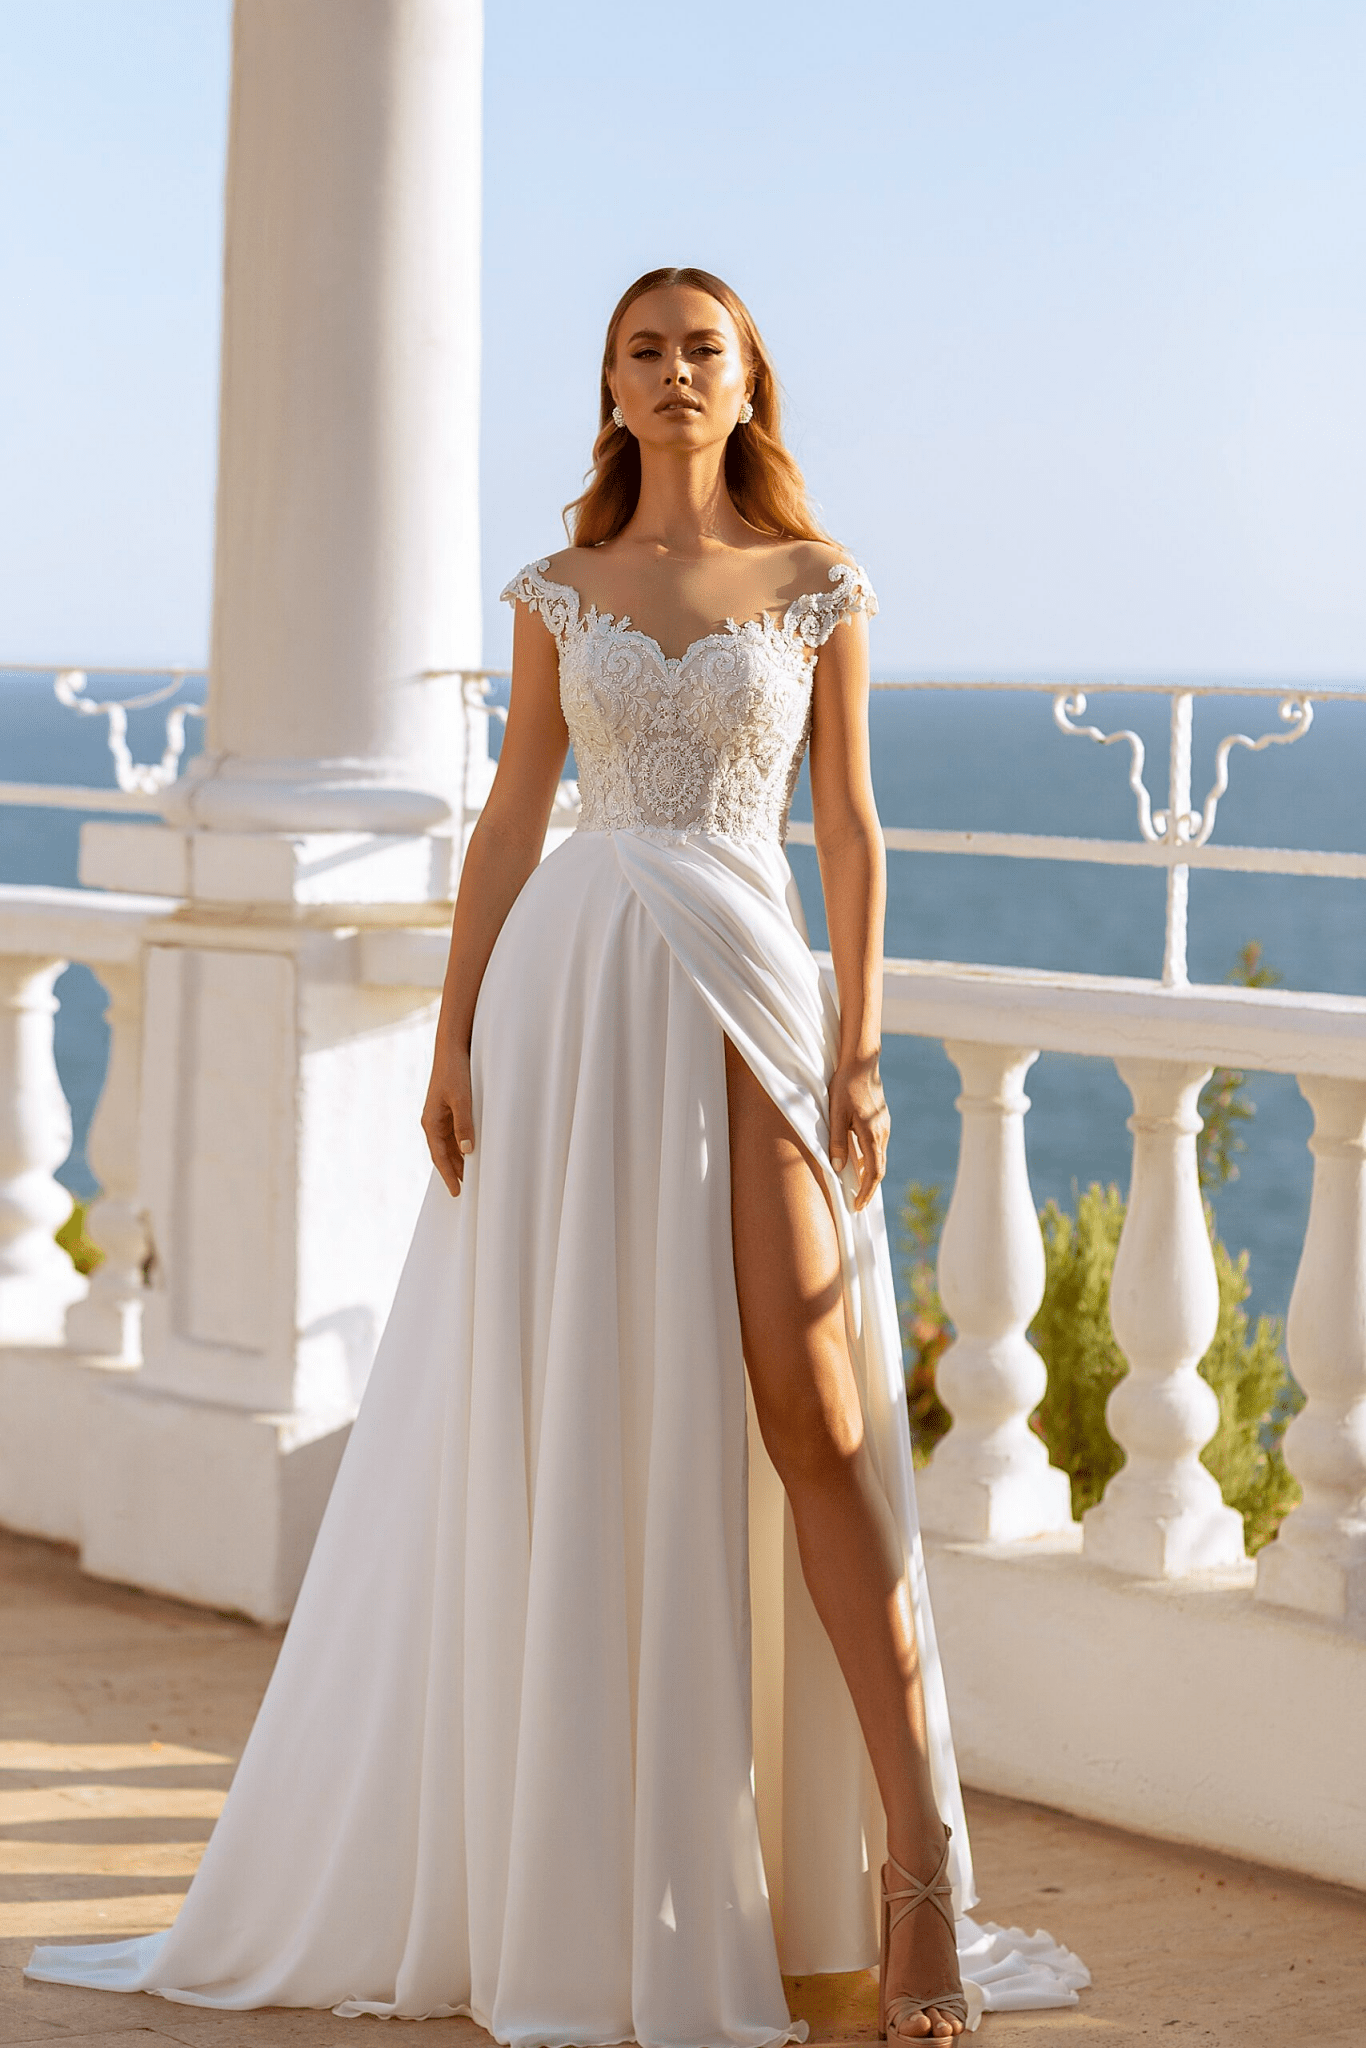 Off - Shoulder Sweetheart Neckline Wedding Dress - Aline Wedding Dress with High Slit - Lace Bodice Wedding Gown Plus Size - WonderlandByLilian